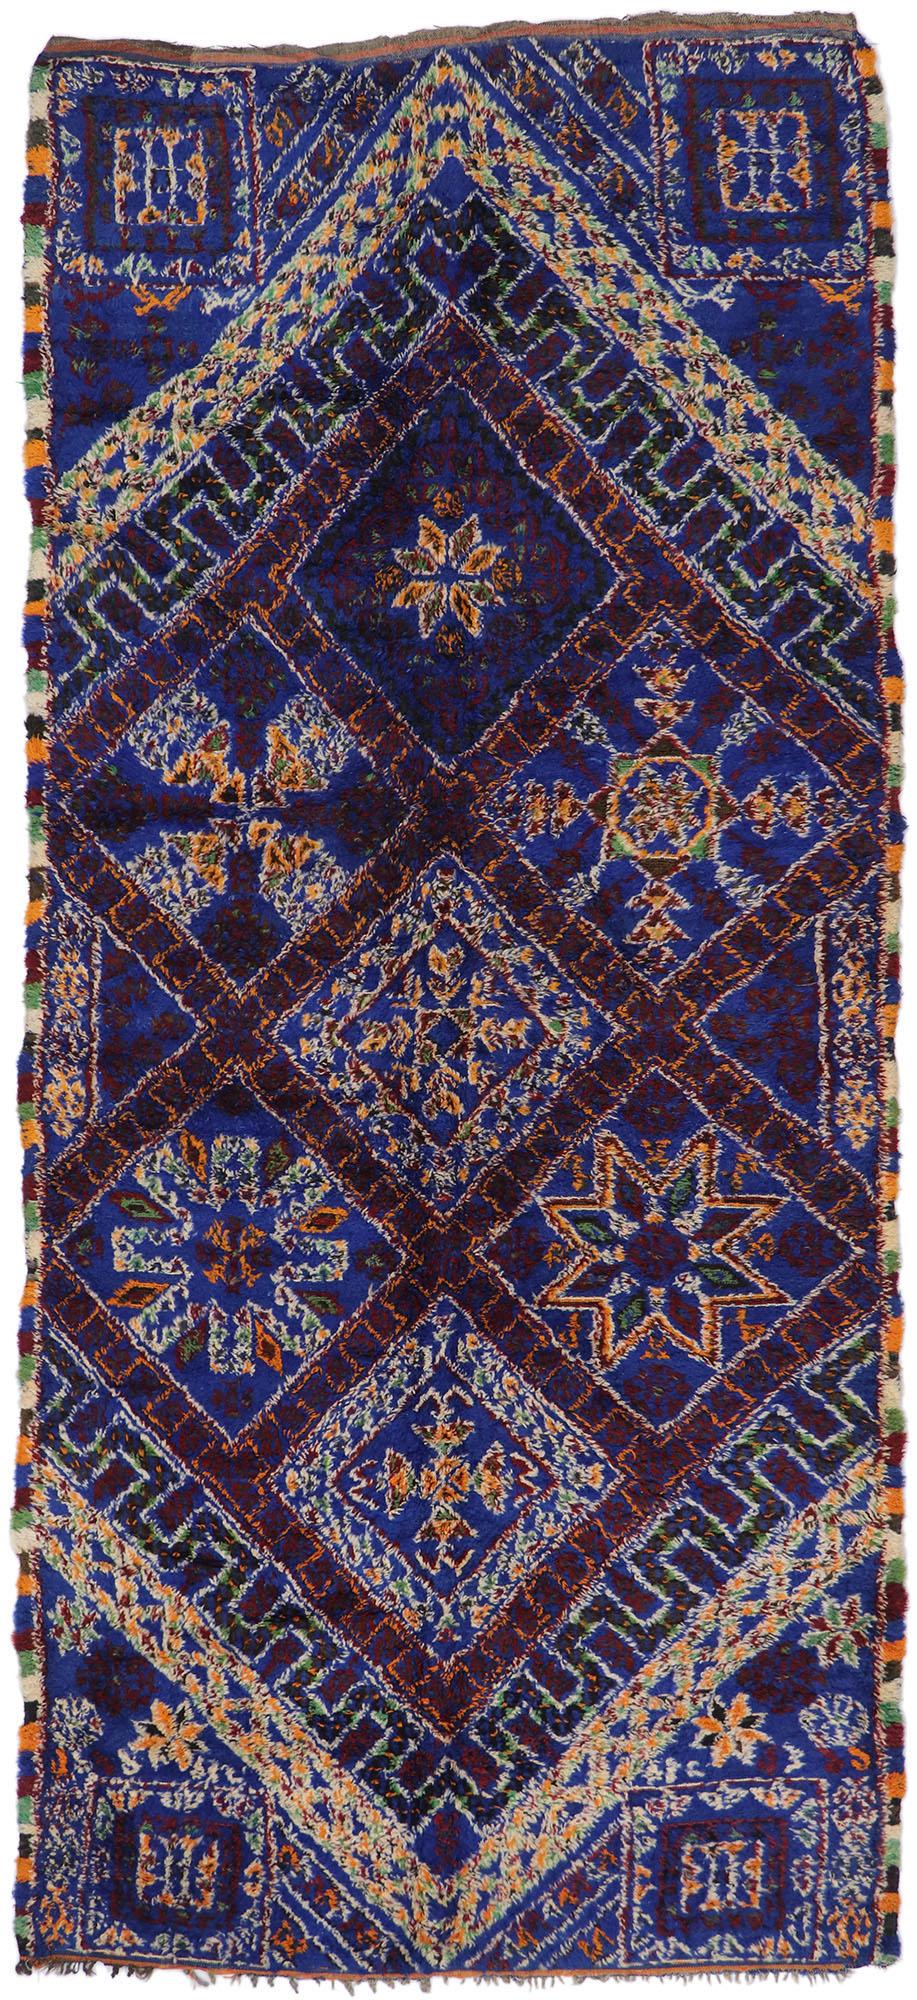 Vintage Blue Beni M'guild Moroccan Rug, Modern Style Meets Nomadic Charm For Sale 2